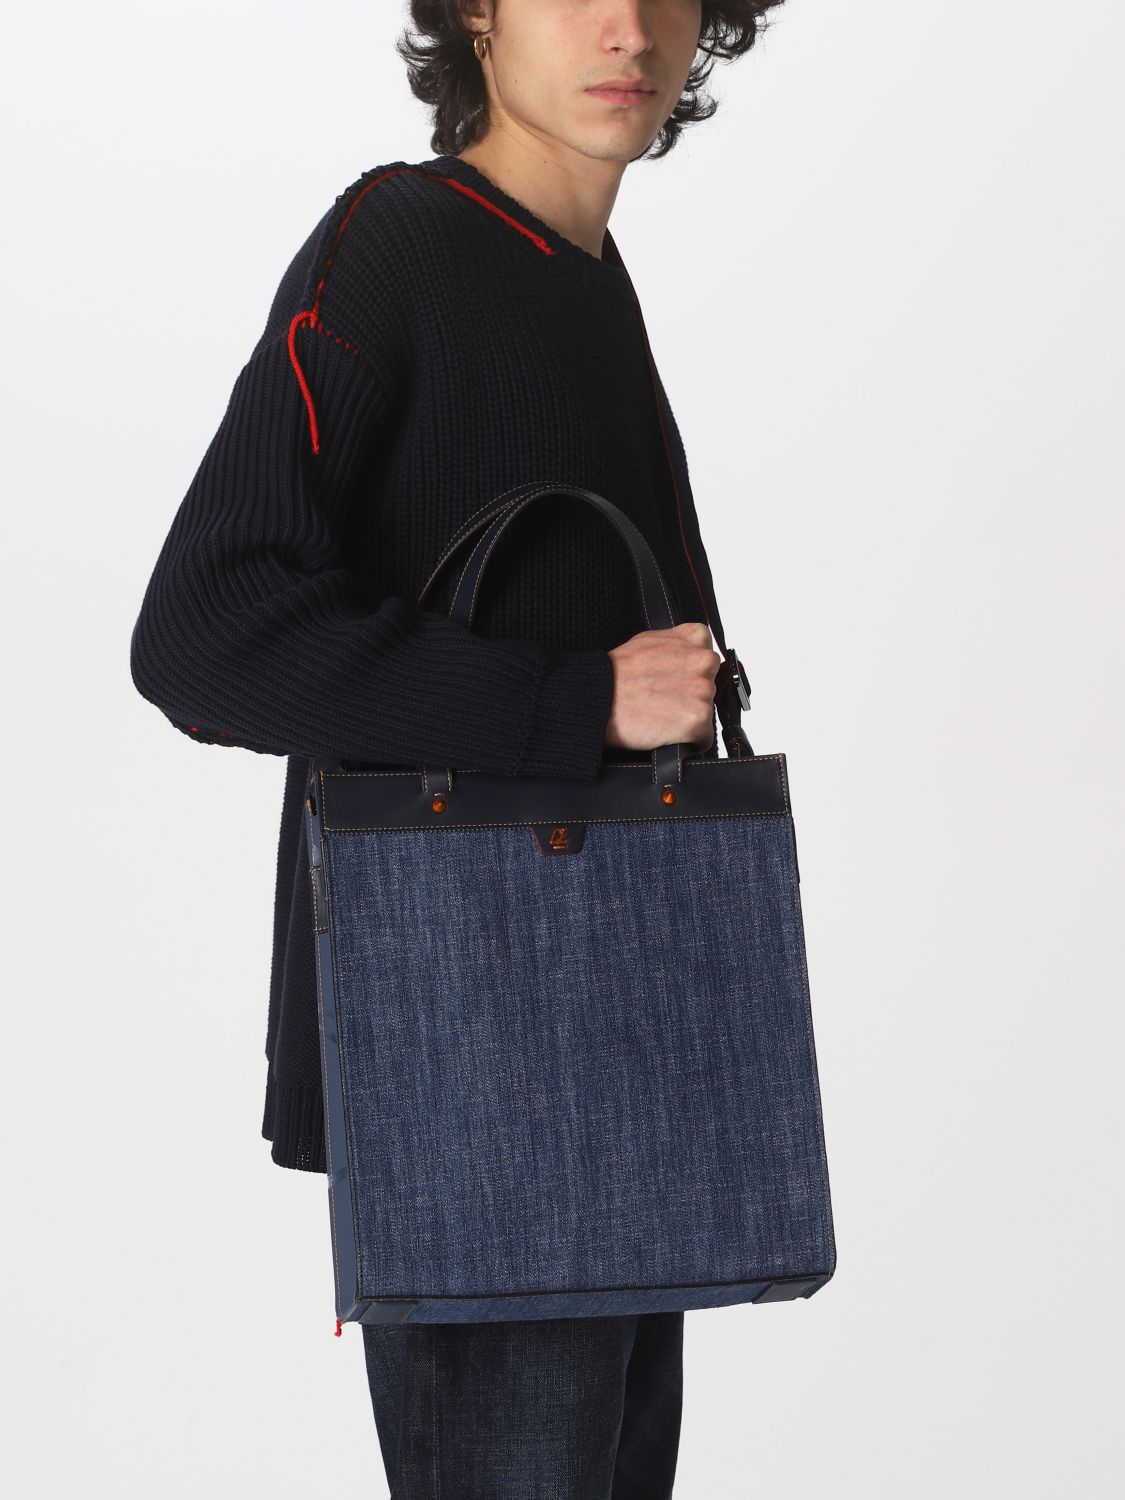 Blue Ruistote denim & leather tote bag, Christian Louboutin